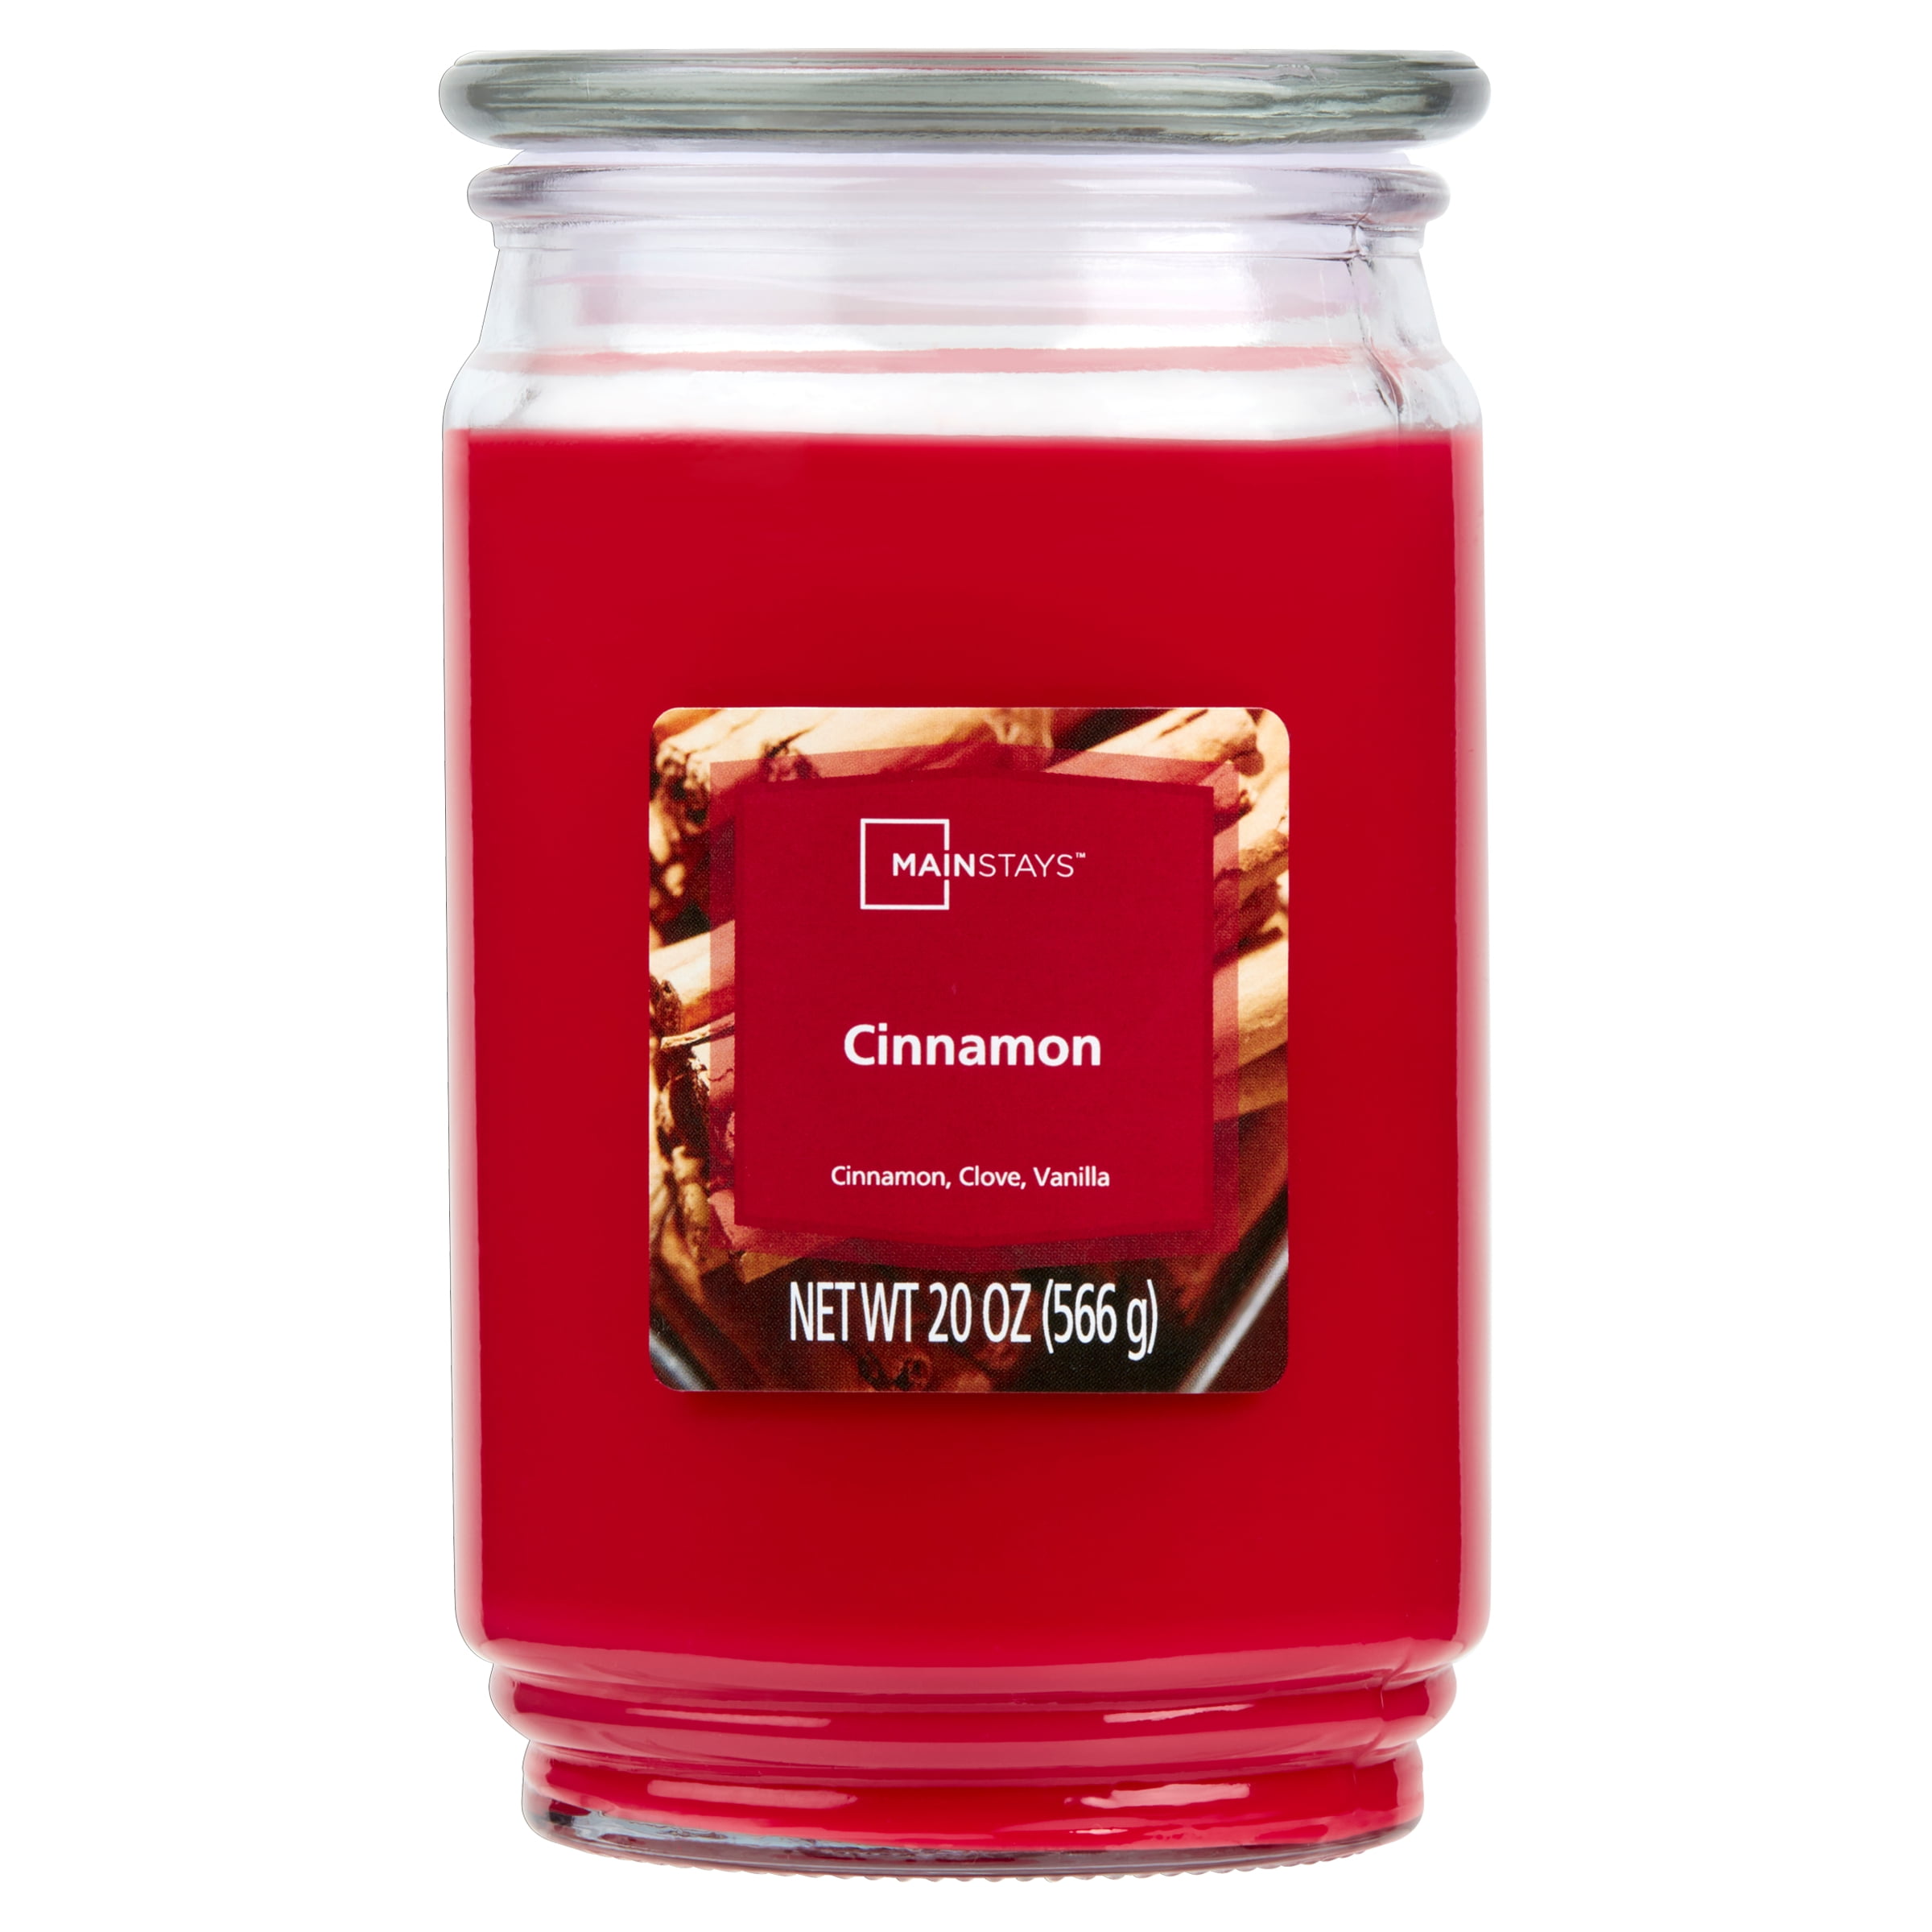 Love Photo Personalized 10 oz Cinnamon Spice Candle Jar